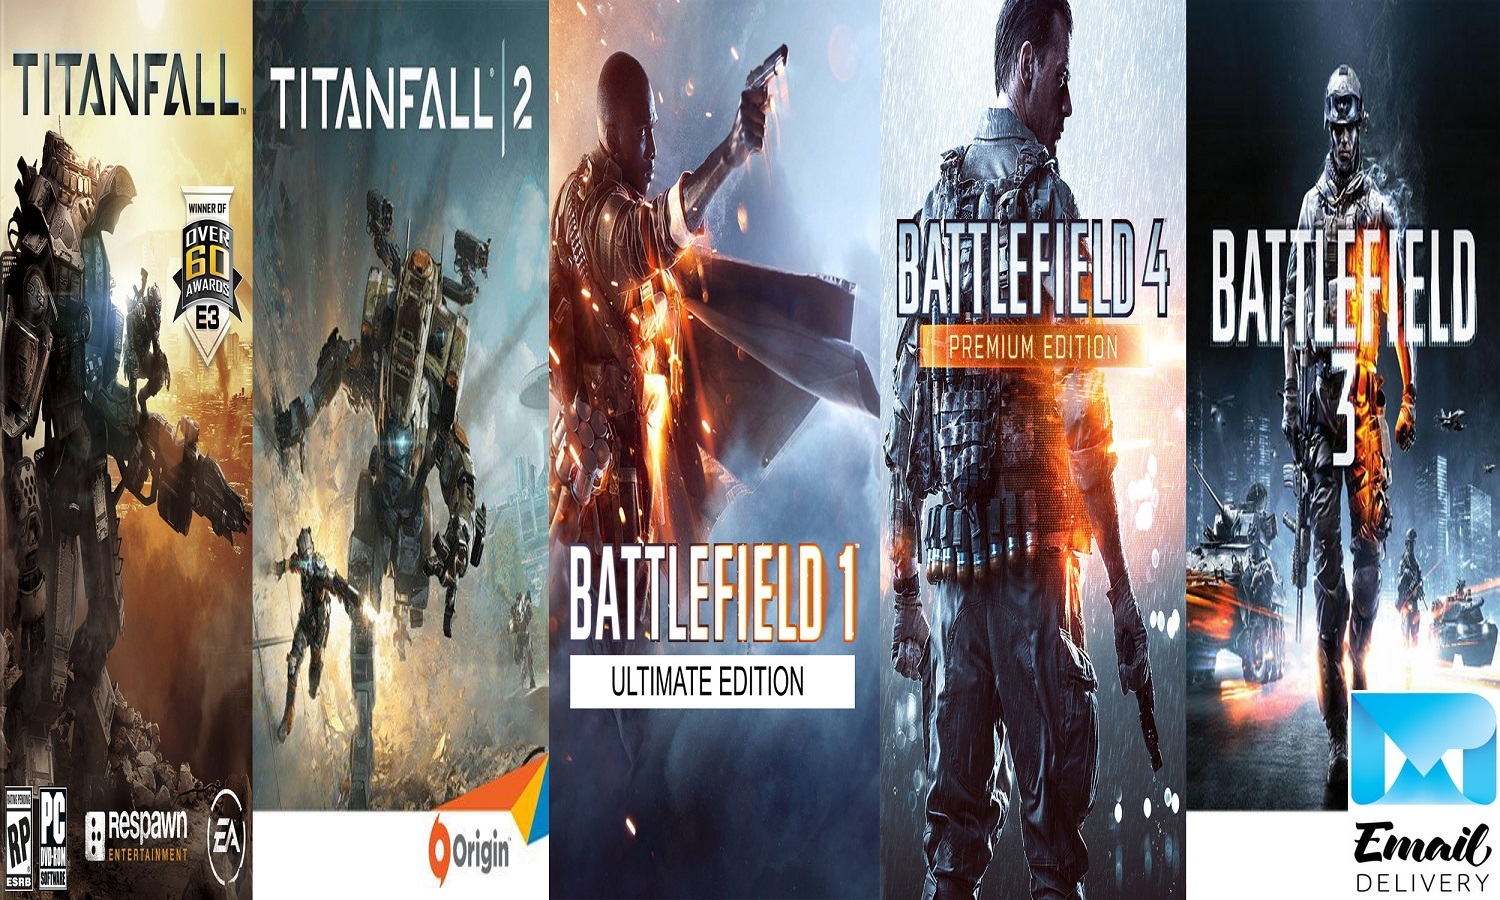 Battlefield 1 Ultimate Edition Battlefield 4 Premium Bf 3 Titanfall 2 Titanfall 1 Pc Origin Account Online Email Change Buy Online At Best Prices In Pakistan Daraz Pk